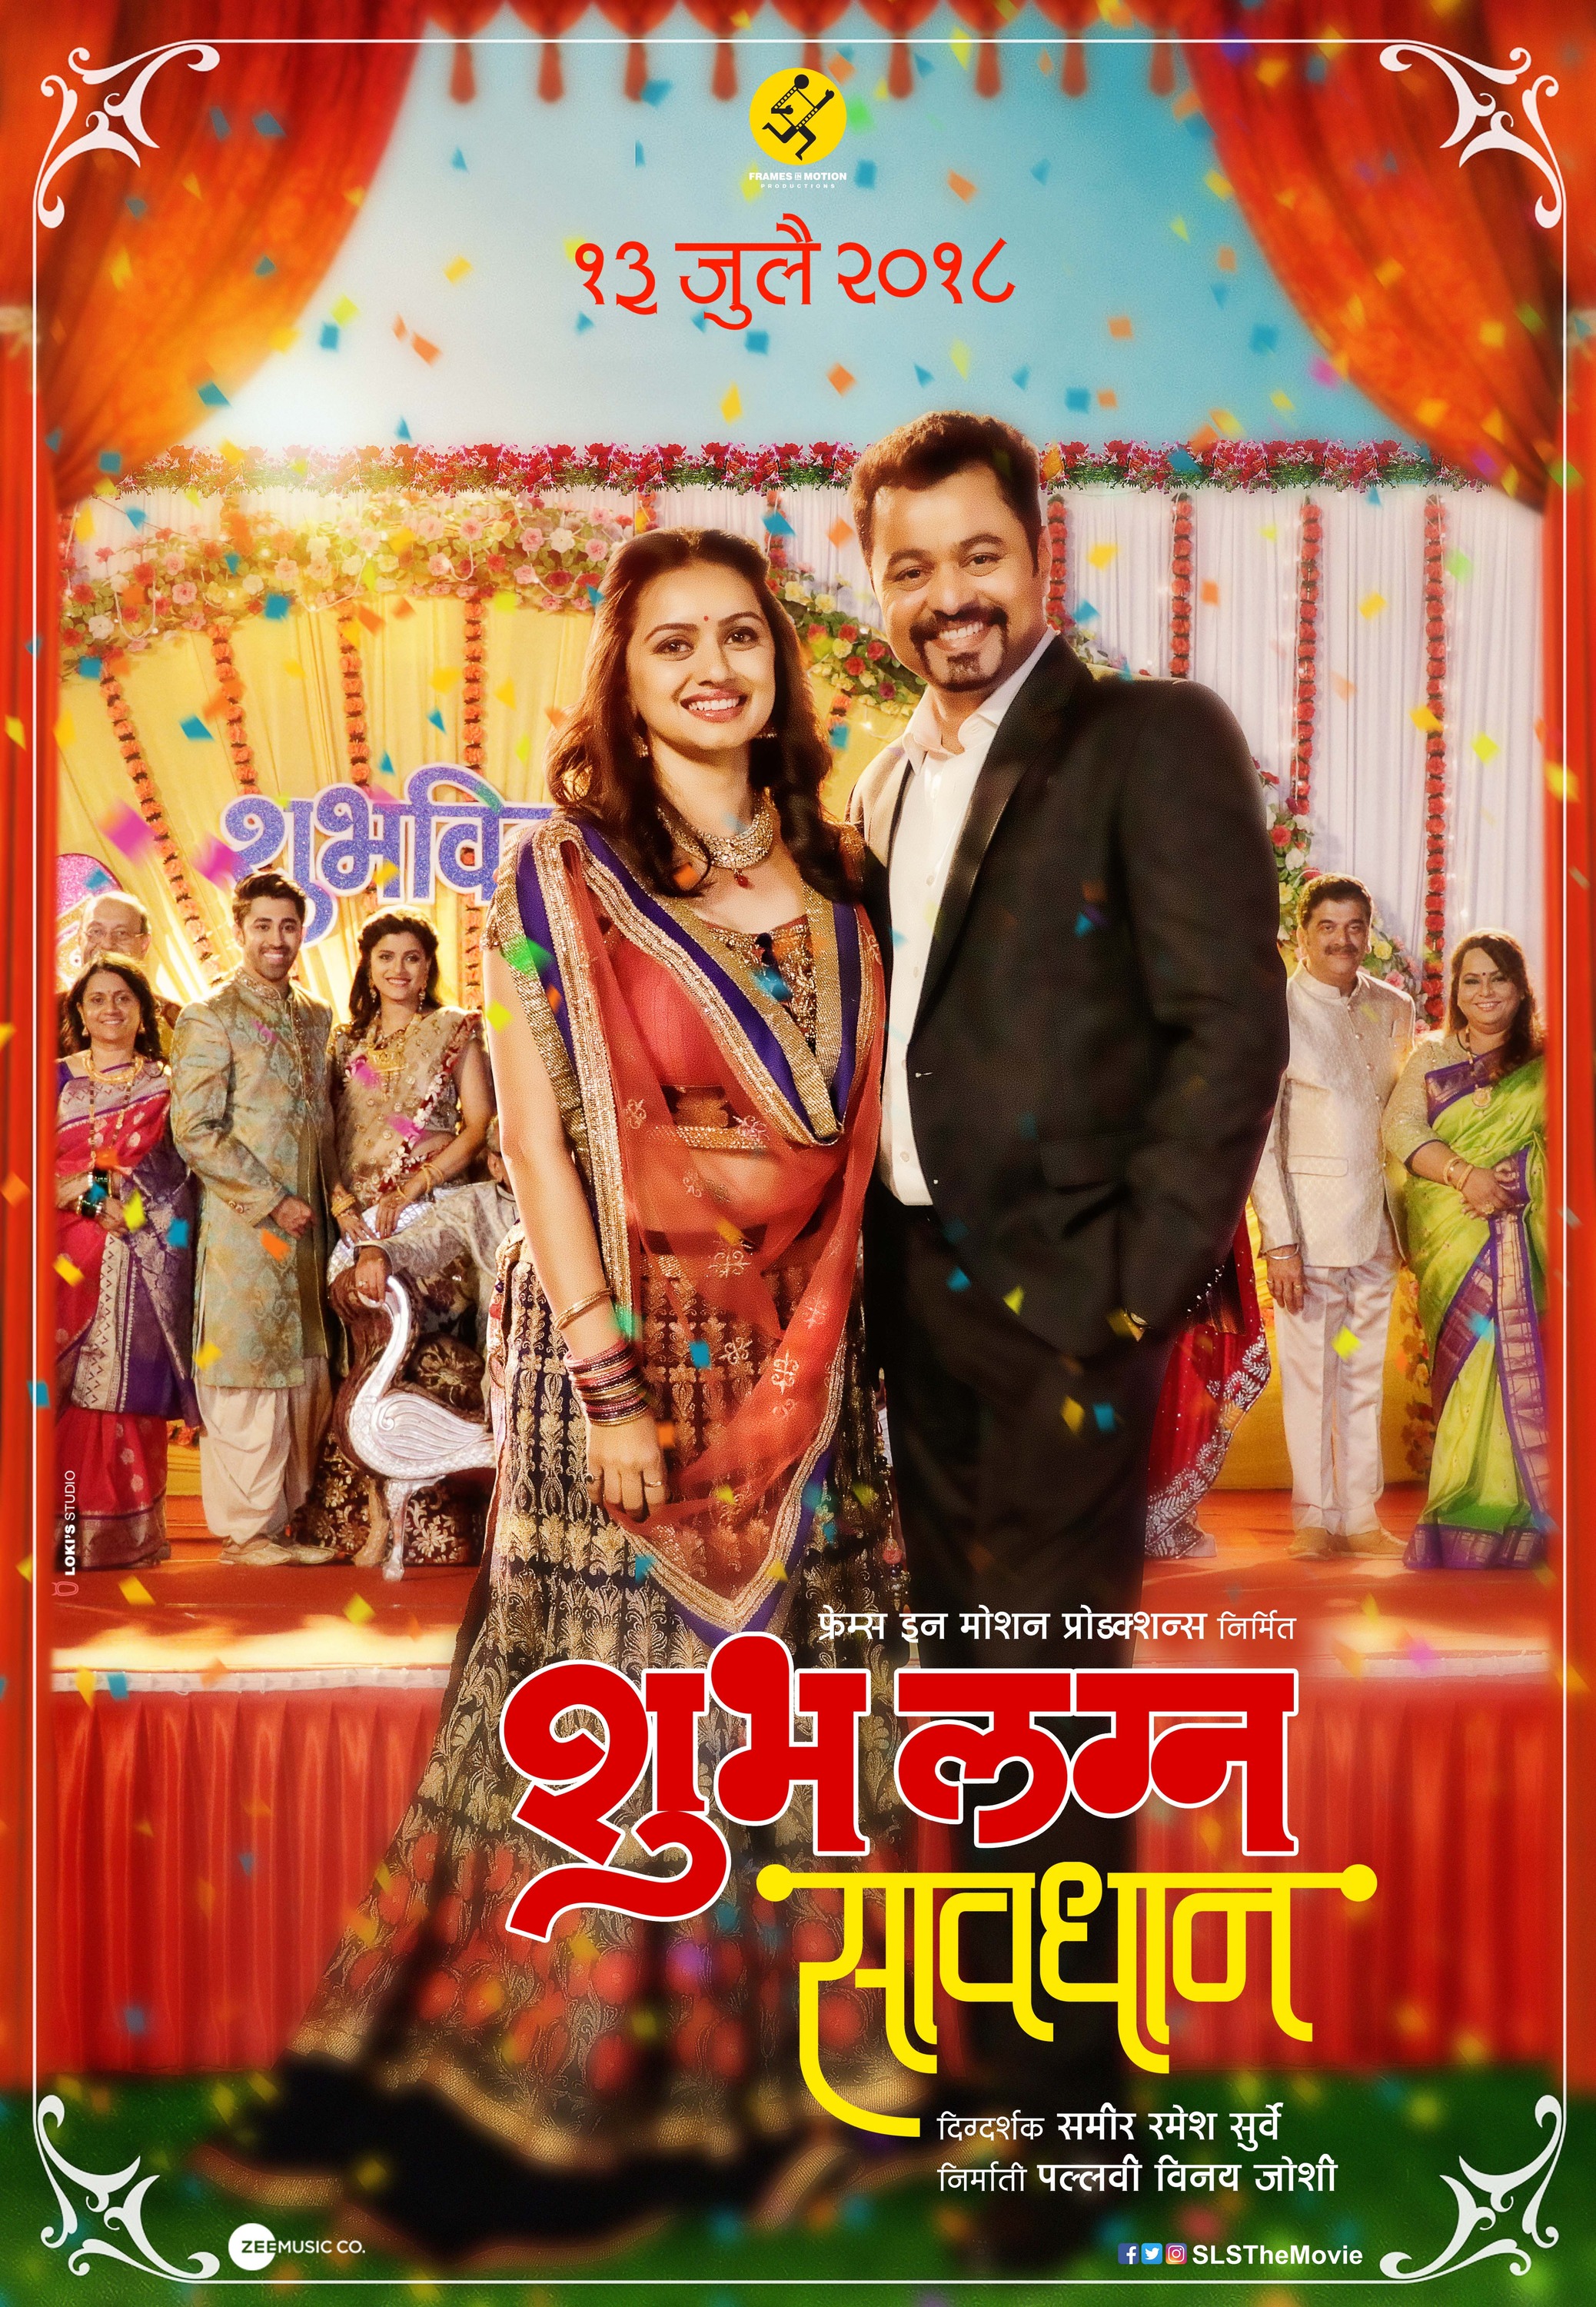 Mega Sized Movie Poster Image for Shubh Lagna Savdhan (#4 of 4)